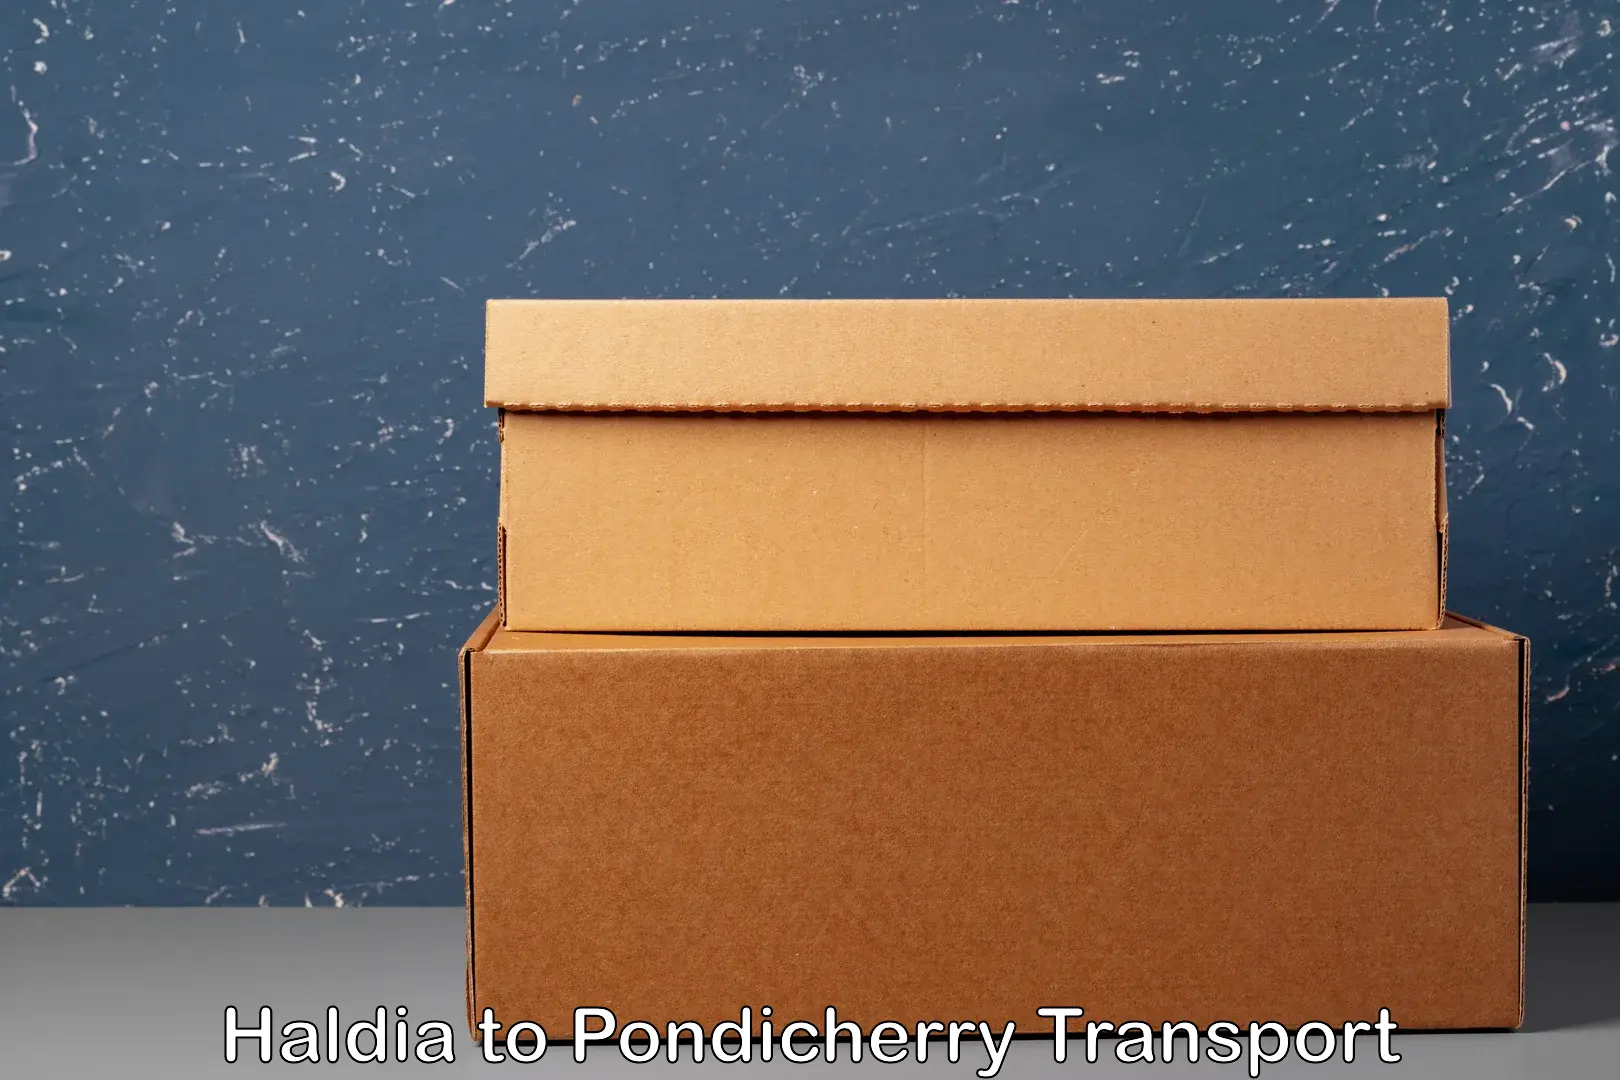 Online transport service Haldia to Pondicherry